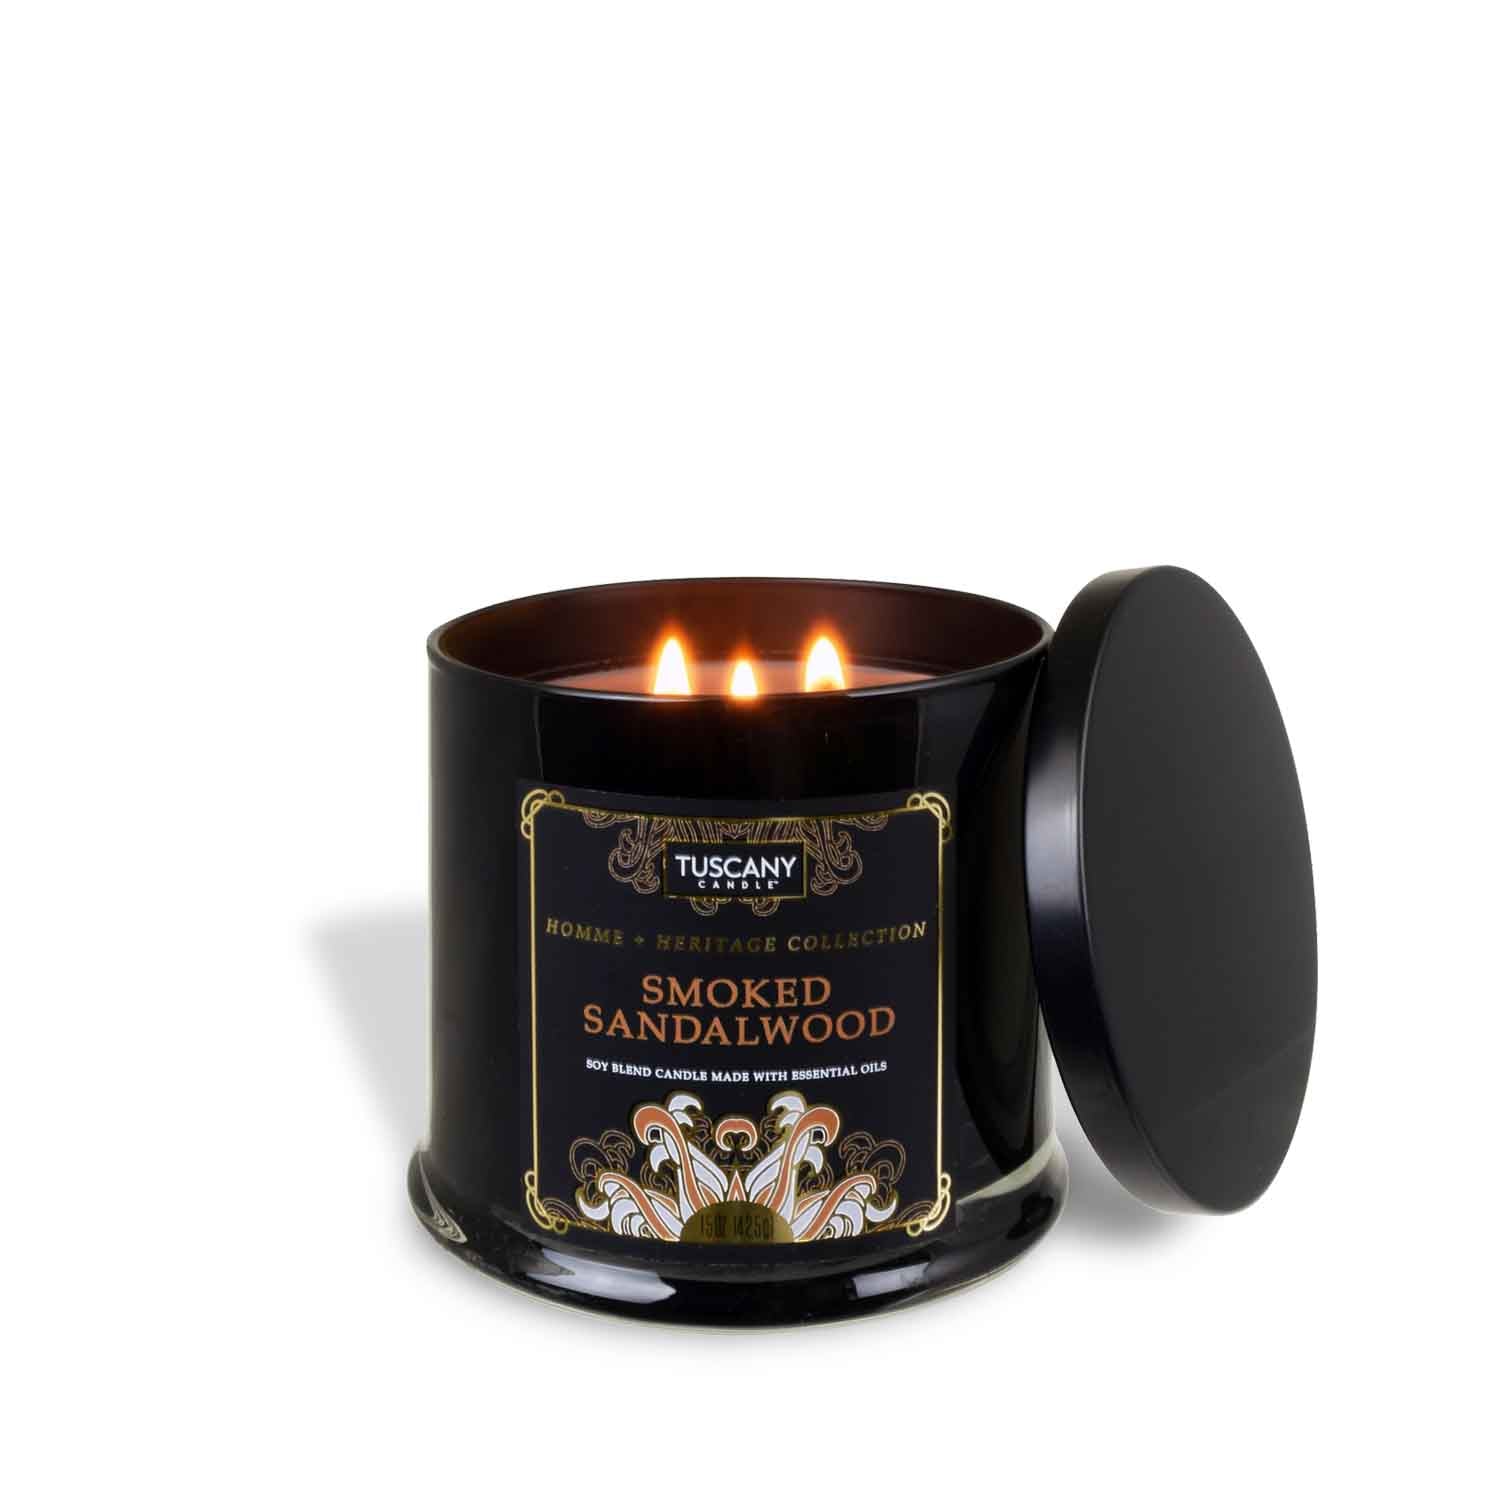 Mahogany Teakwood candle – Sweet U Candles